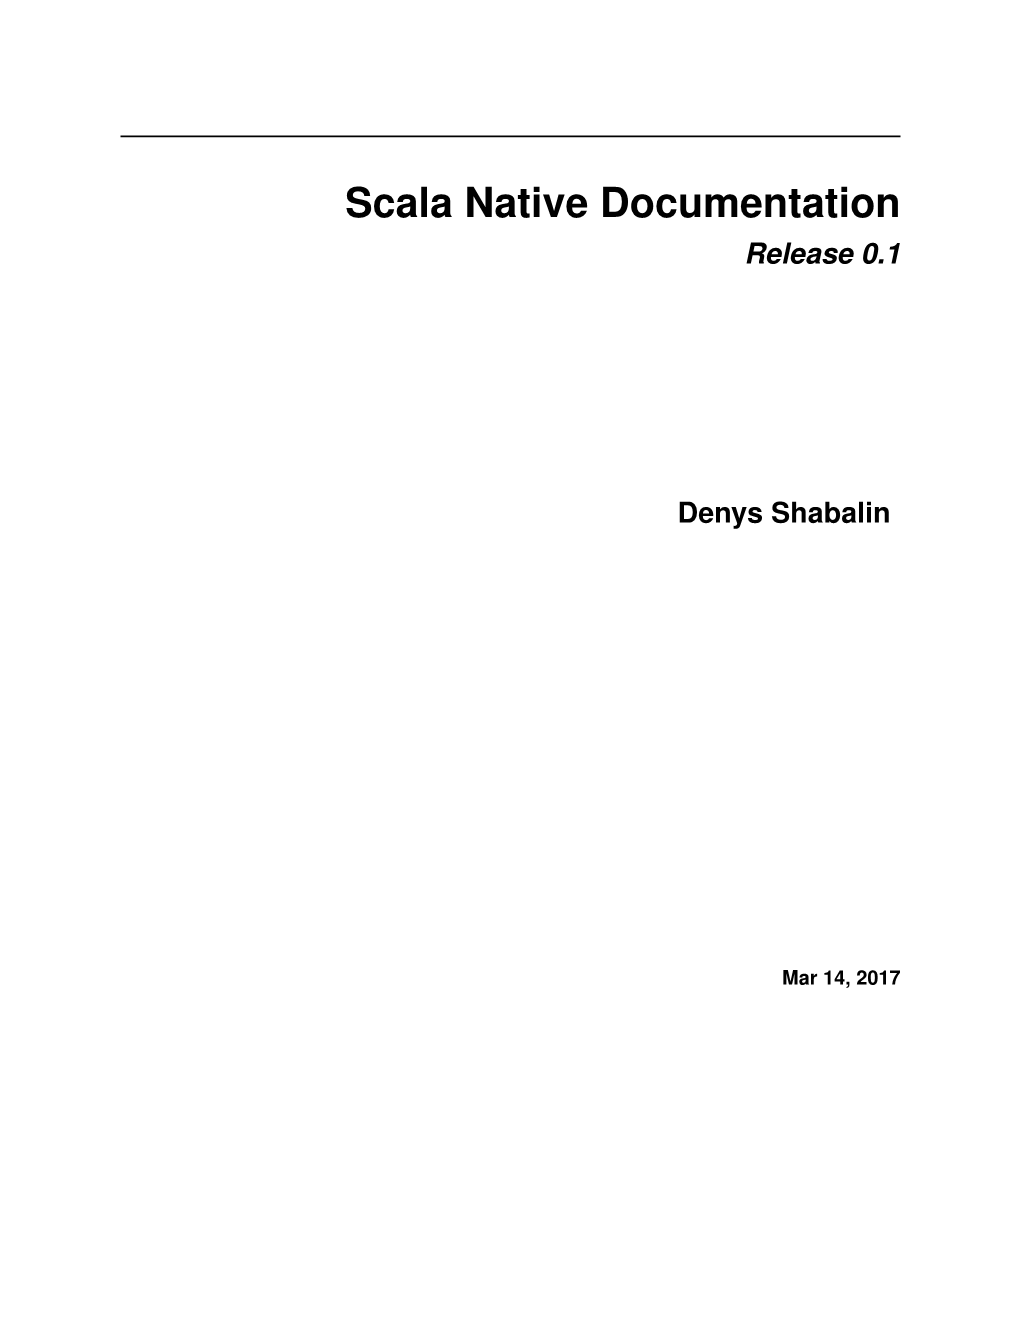 Scala Native Documentation Release 0.1